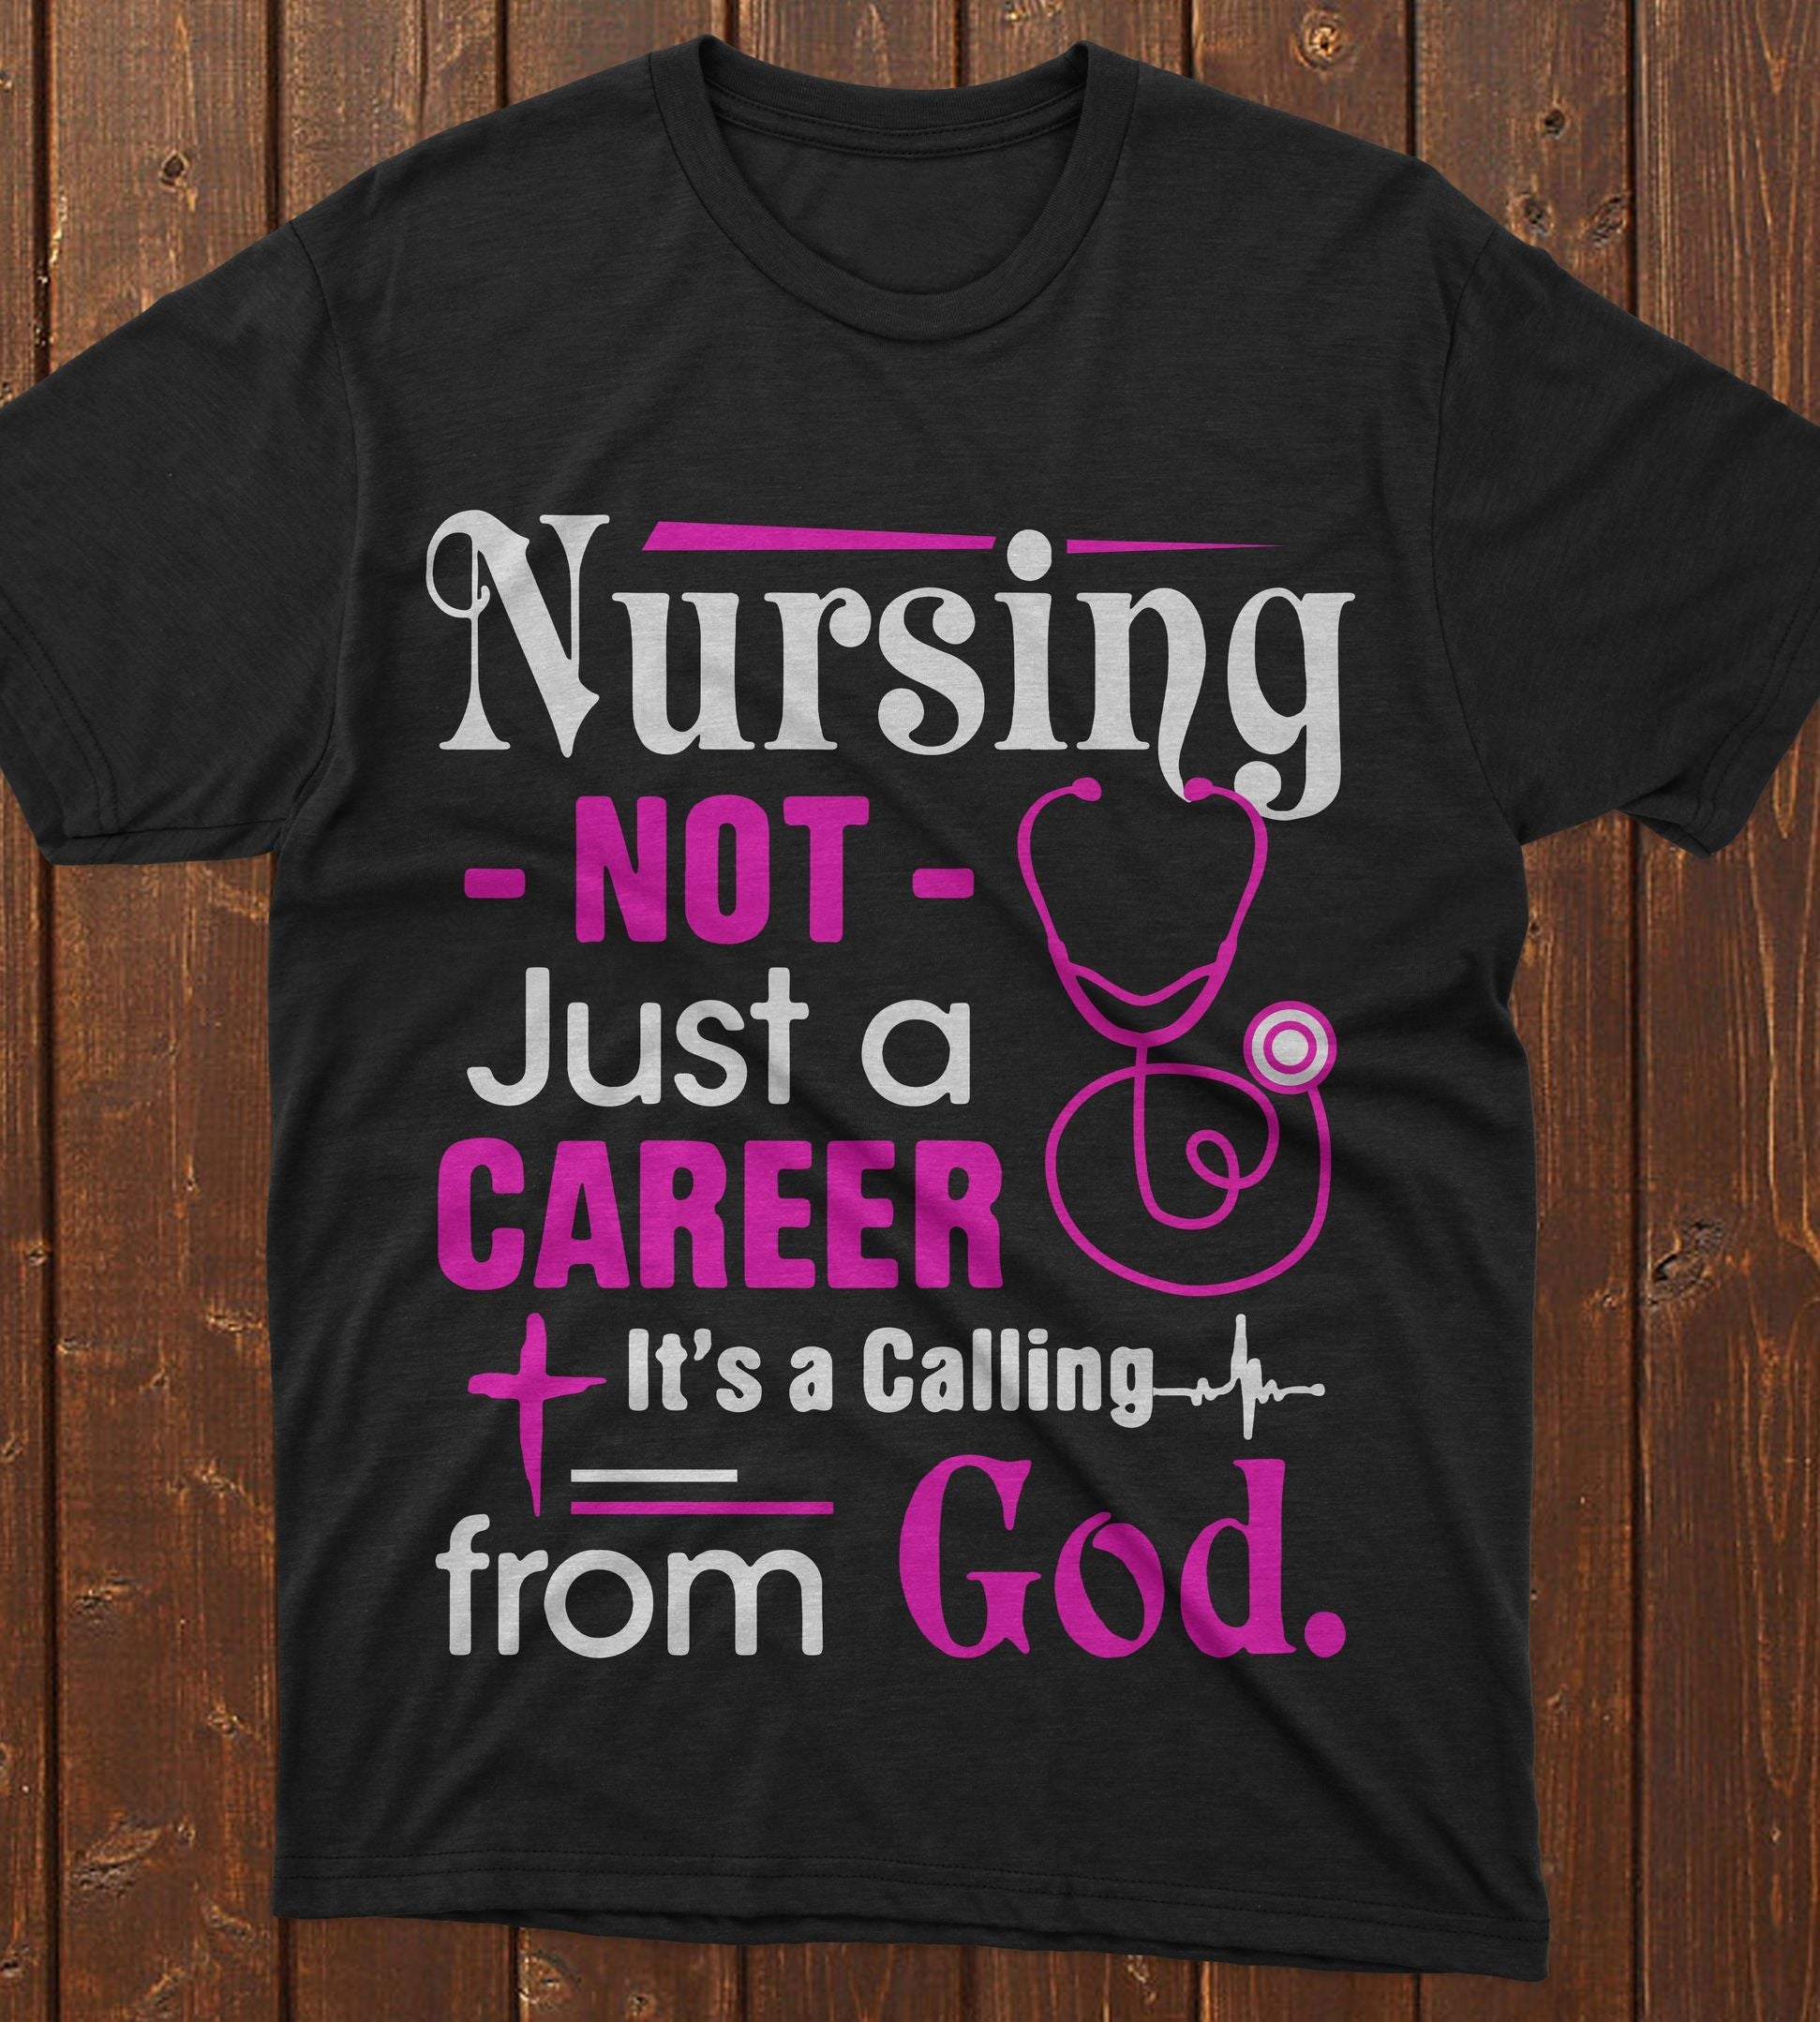 PresentsPrints, Nurse's day nursing not just a career it's a calling from god, Nurse T-Shirt